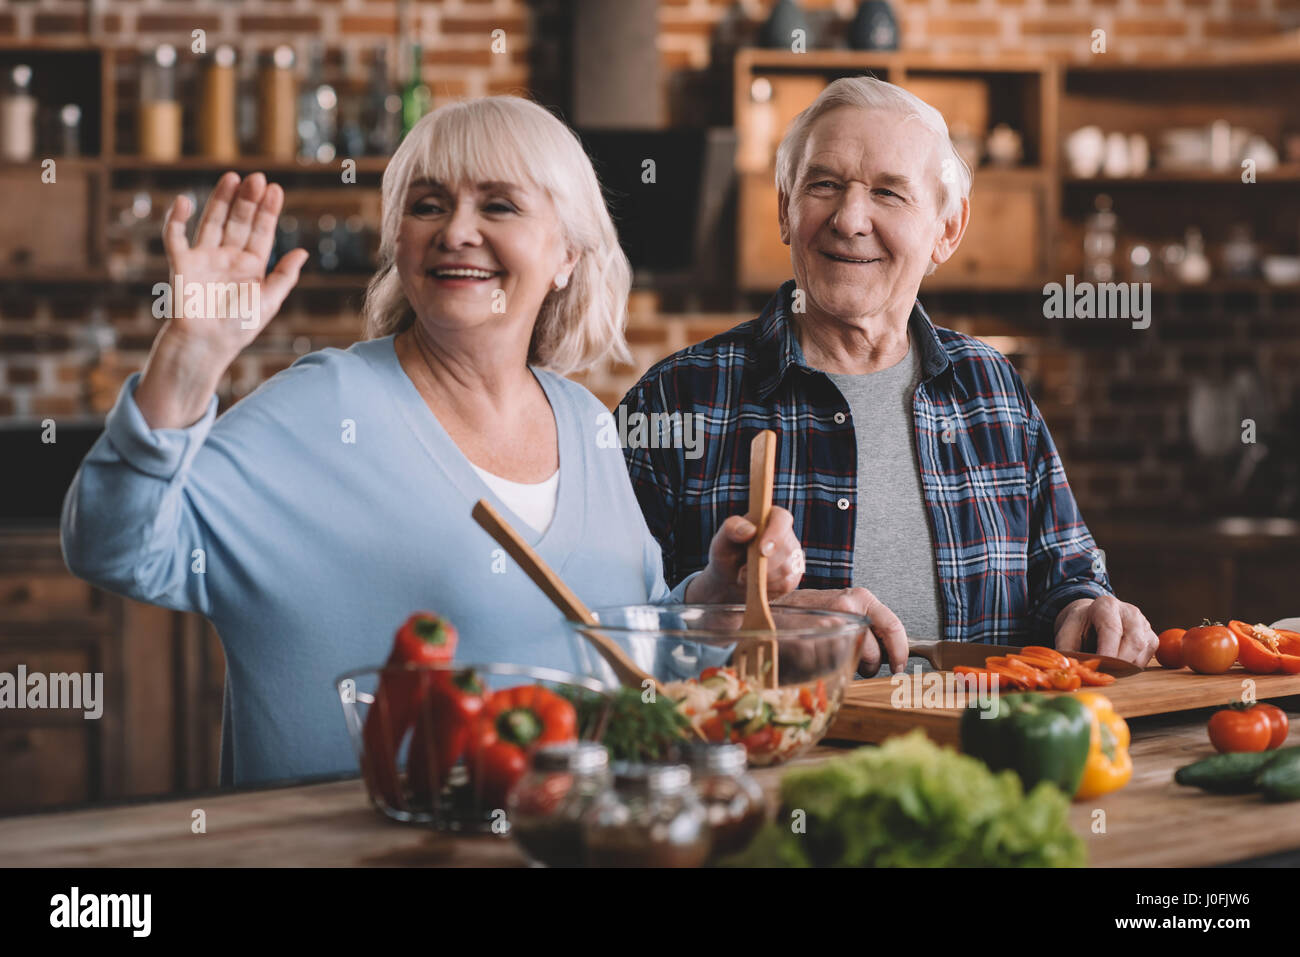 portrait of smiling senior couple making salad together Stock Photo